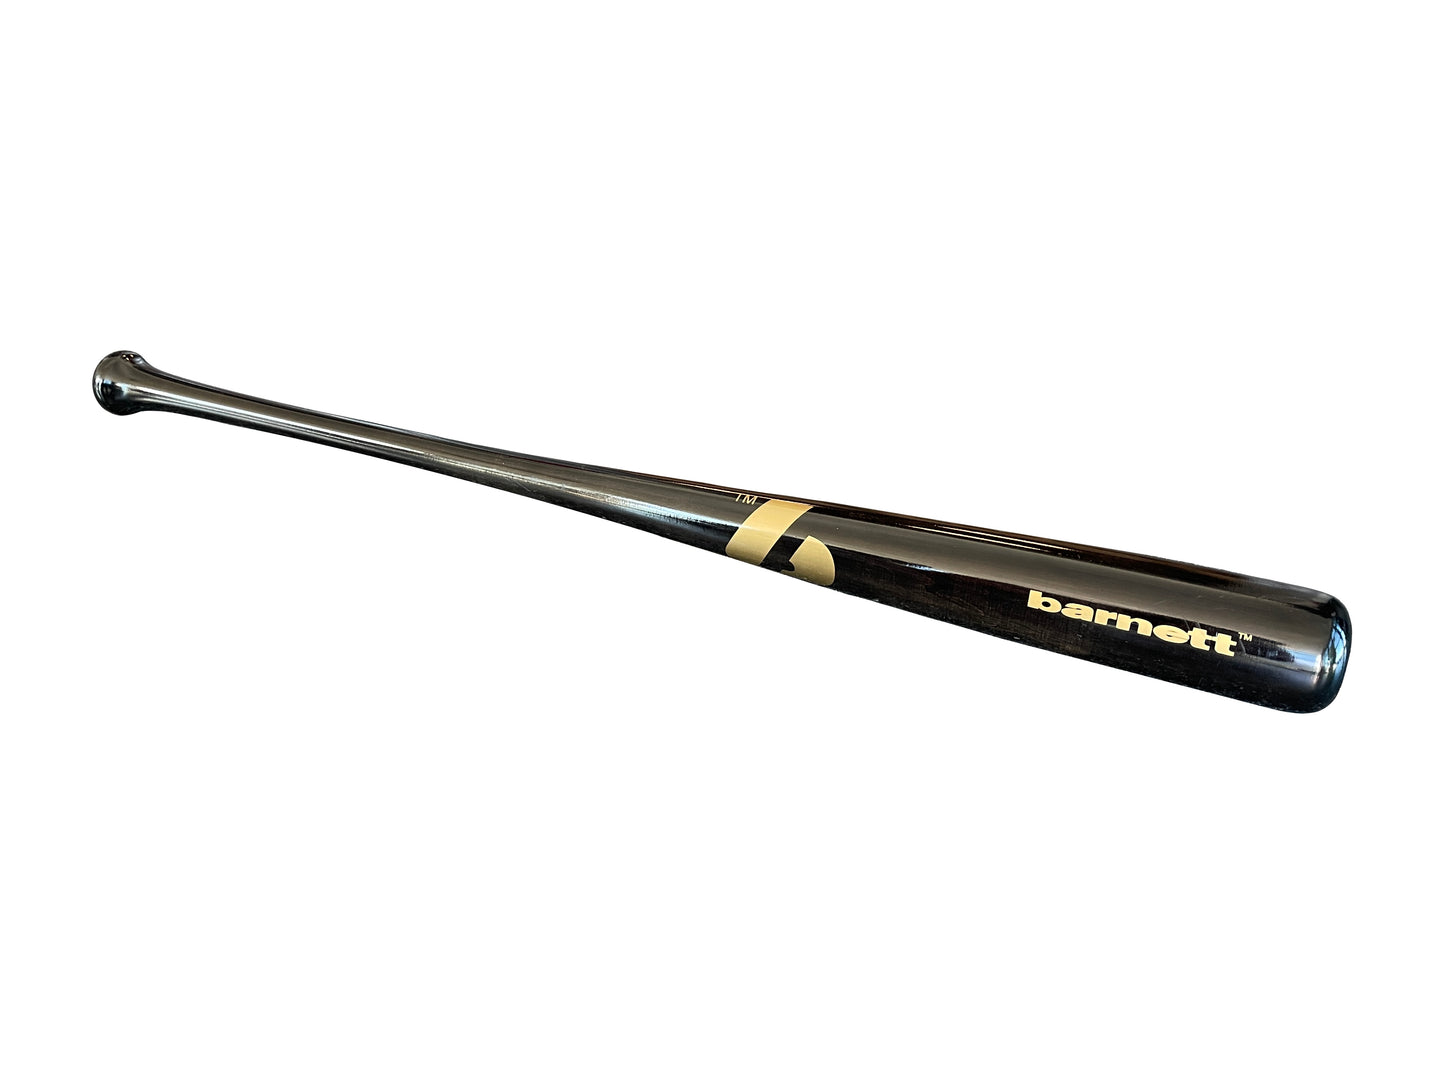 BB-10 Maple wood baseball bat